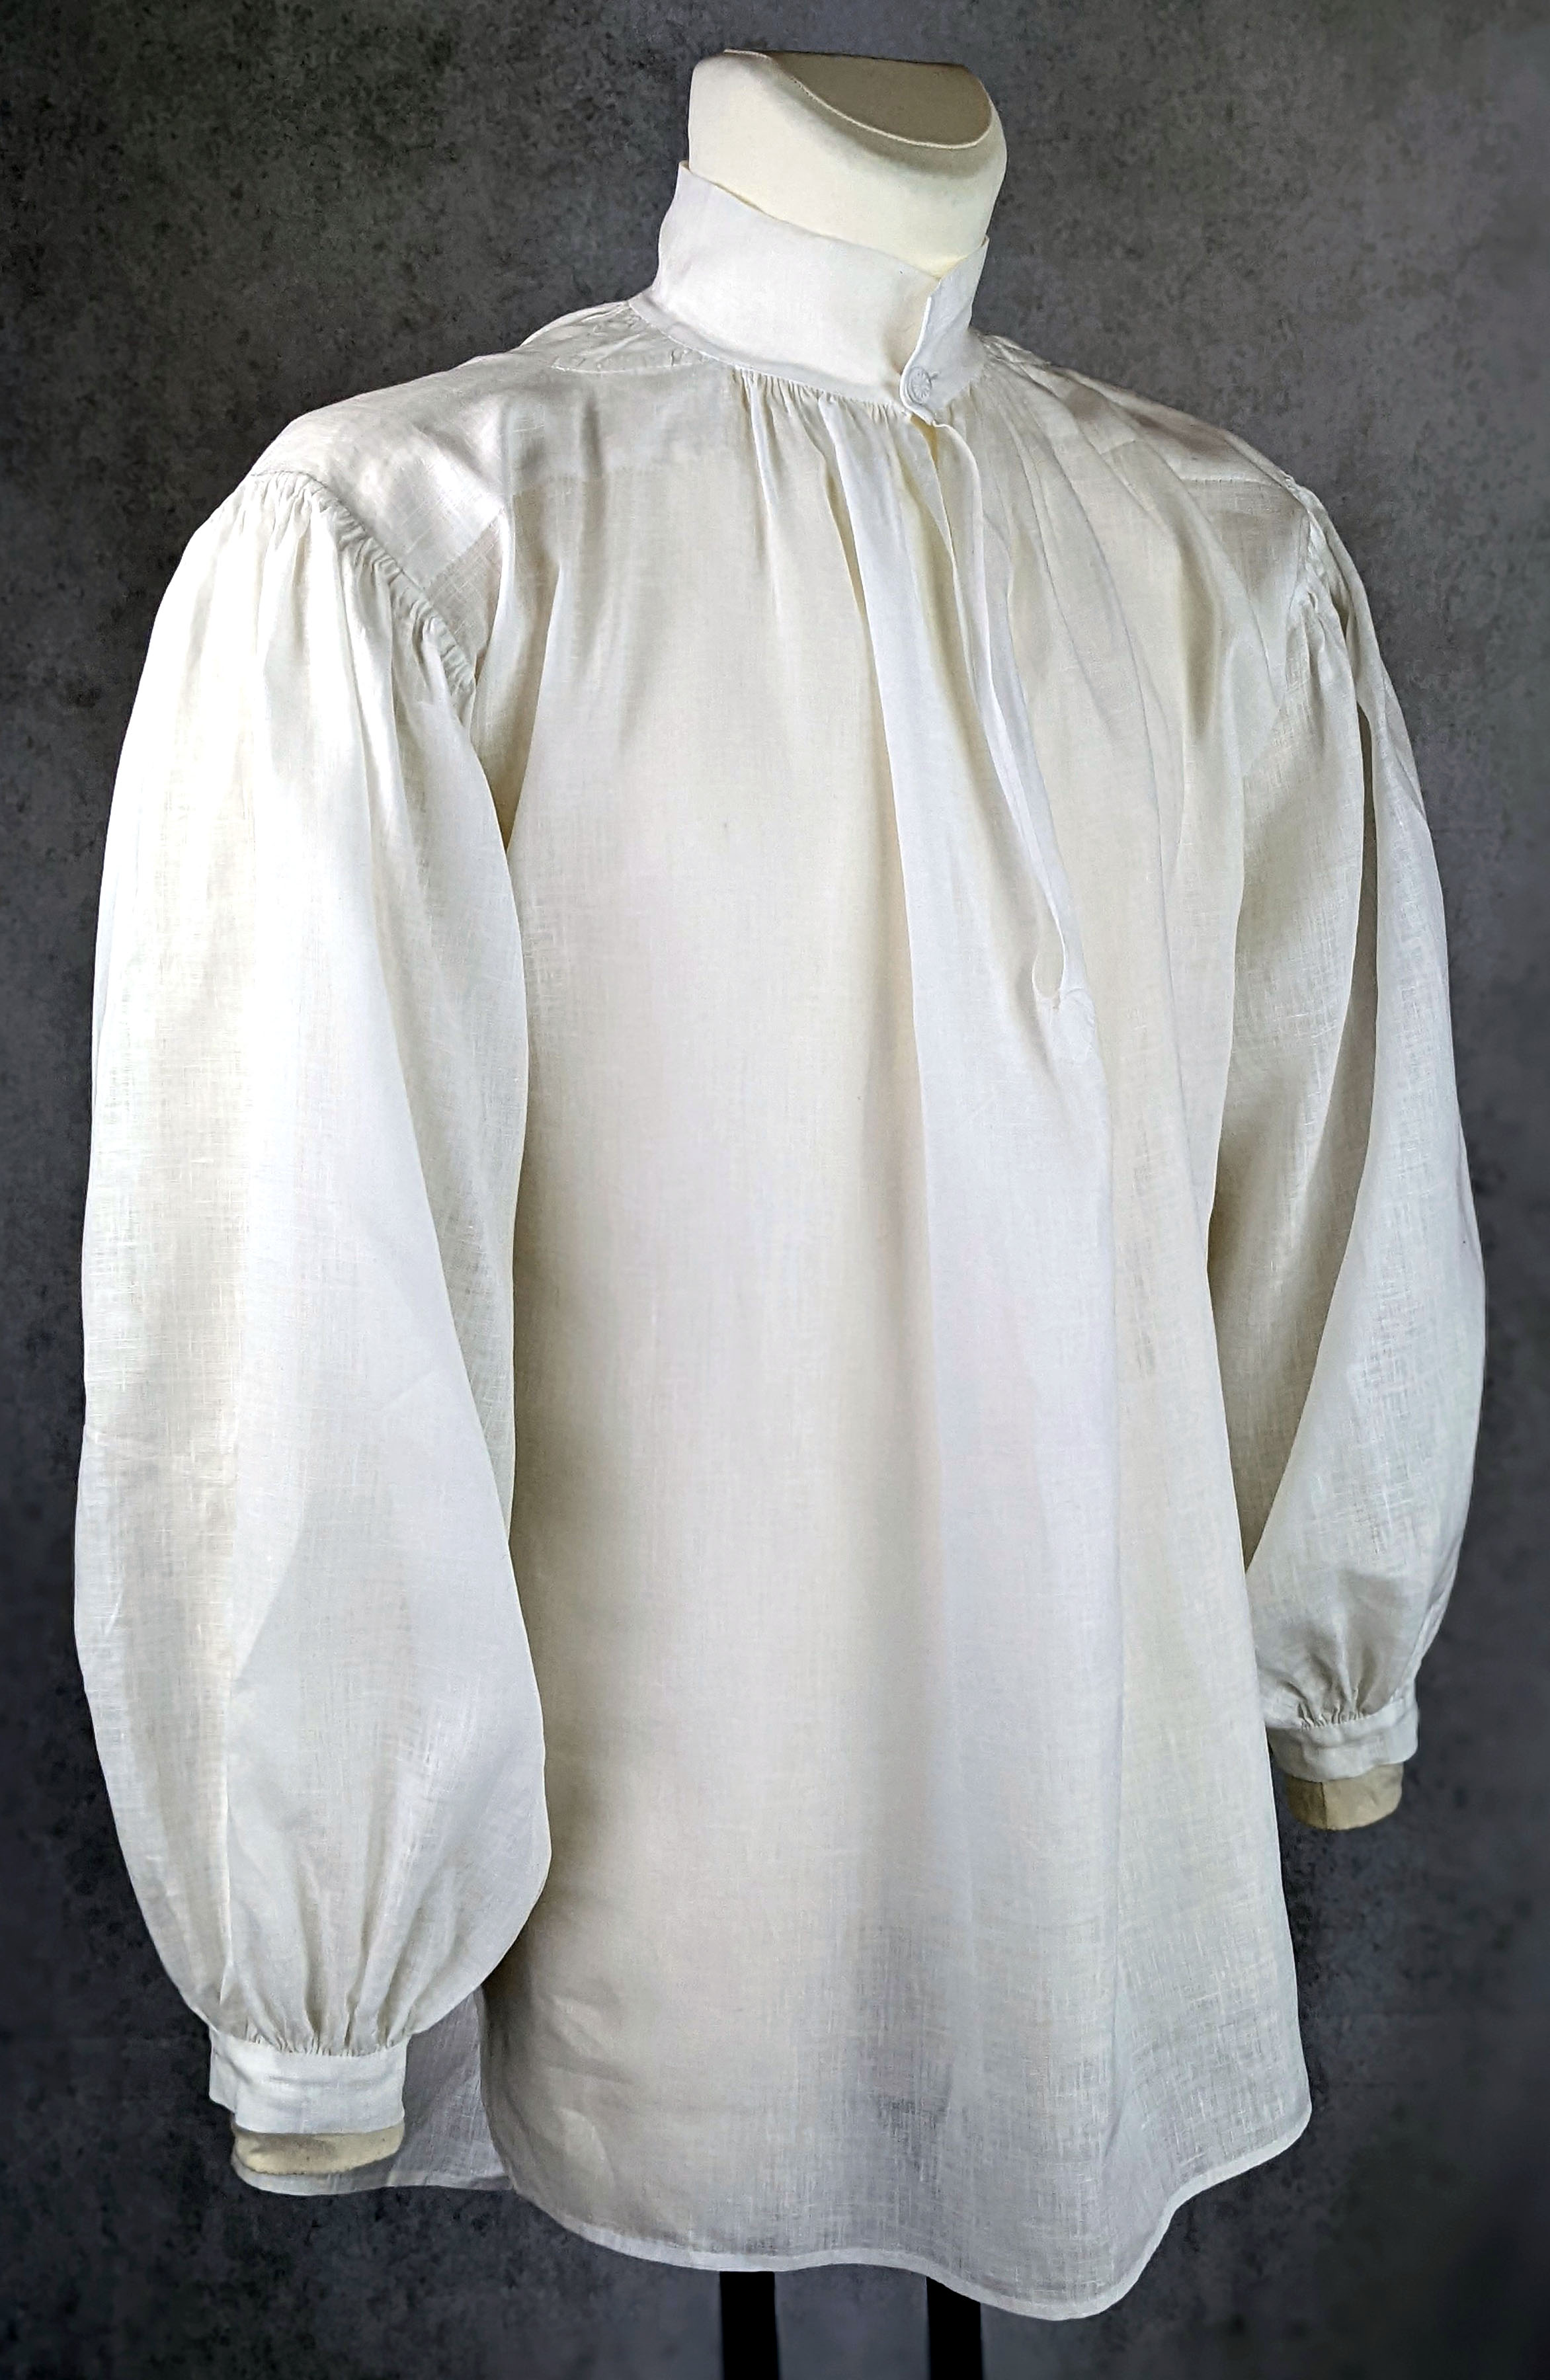 Georgian Empire Regency Mens Shirt Sewing Pattern #0521 Size US 34-56 (EU 44-66)